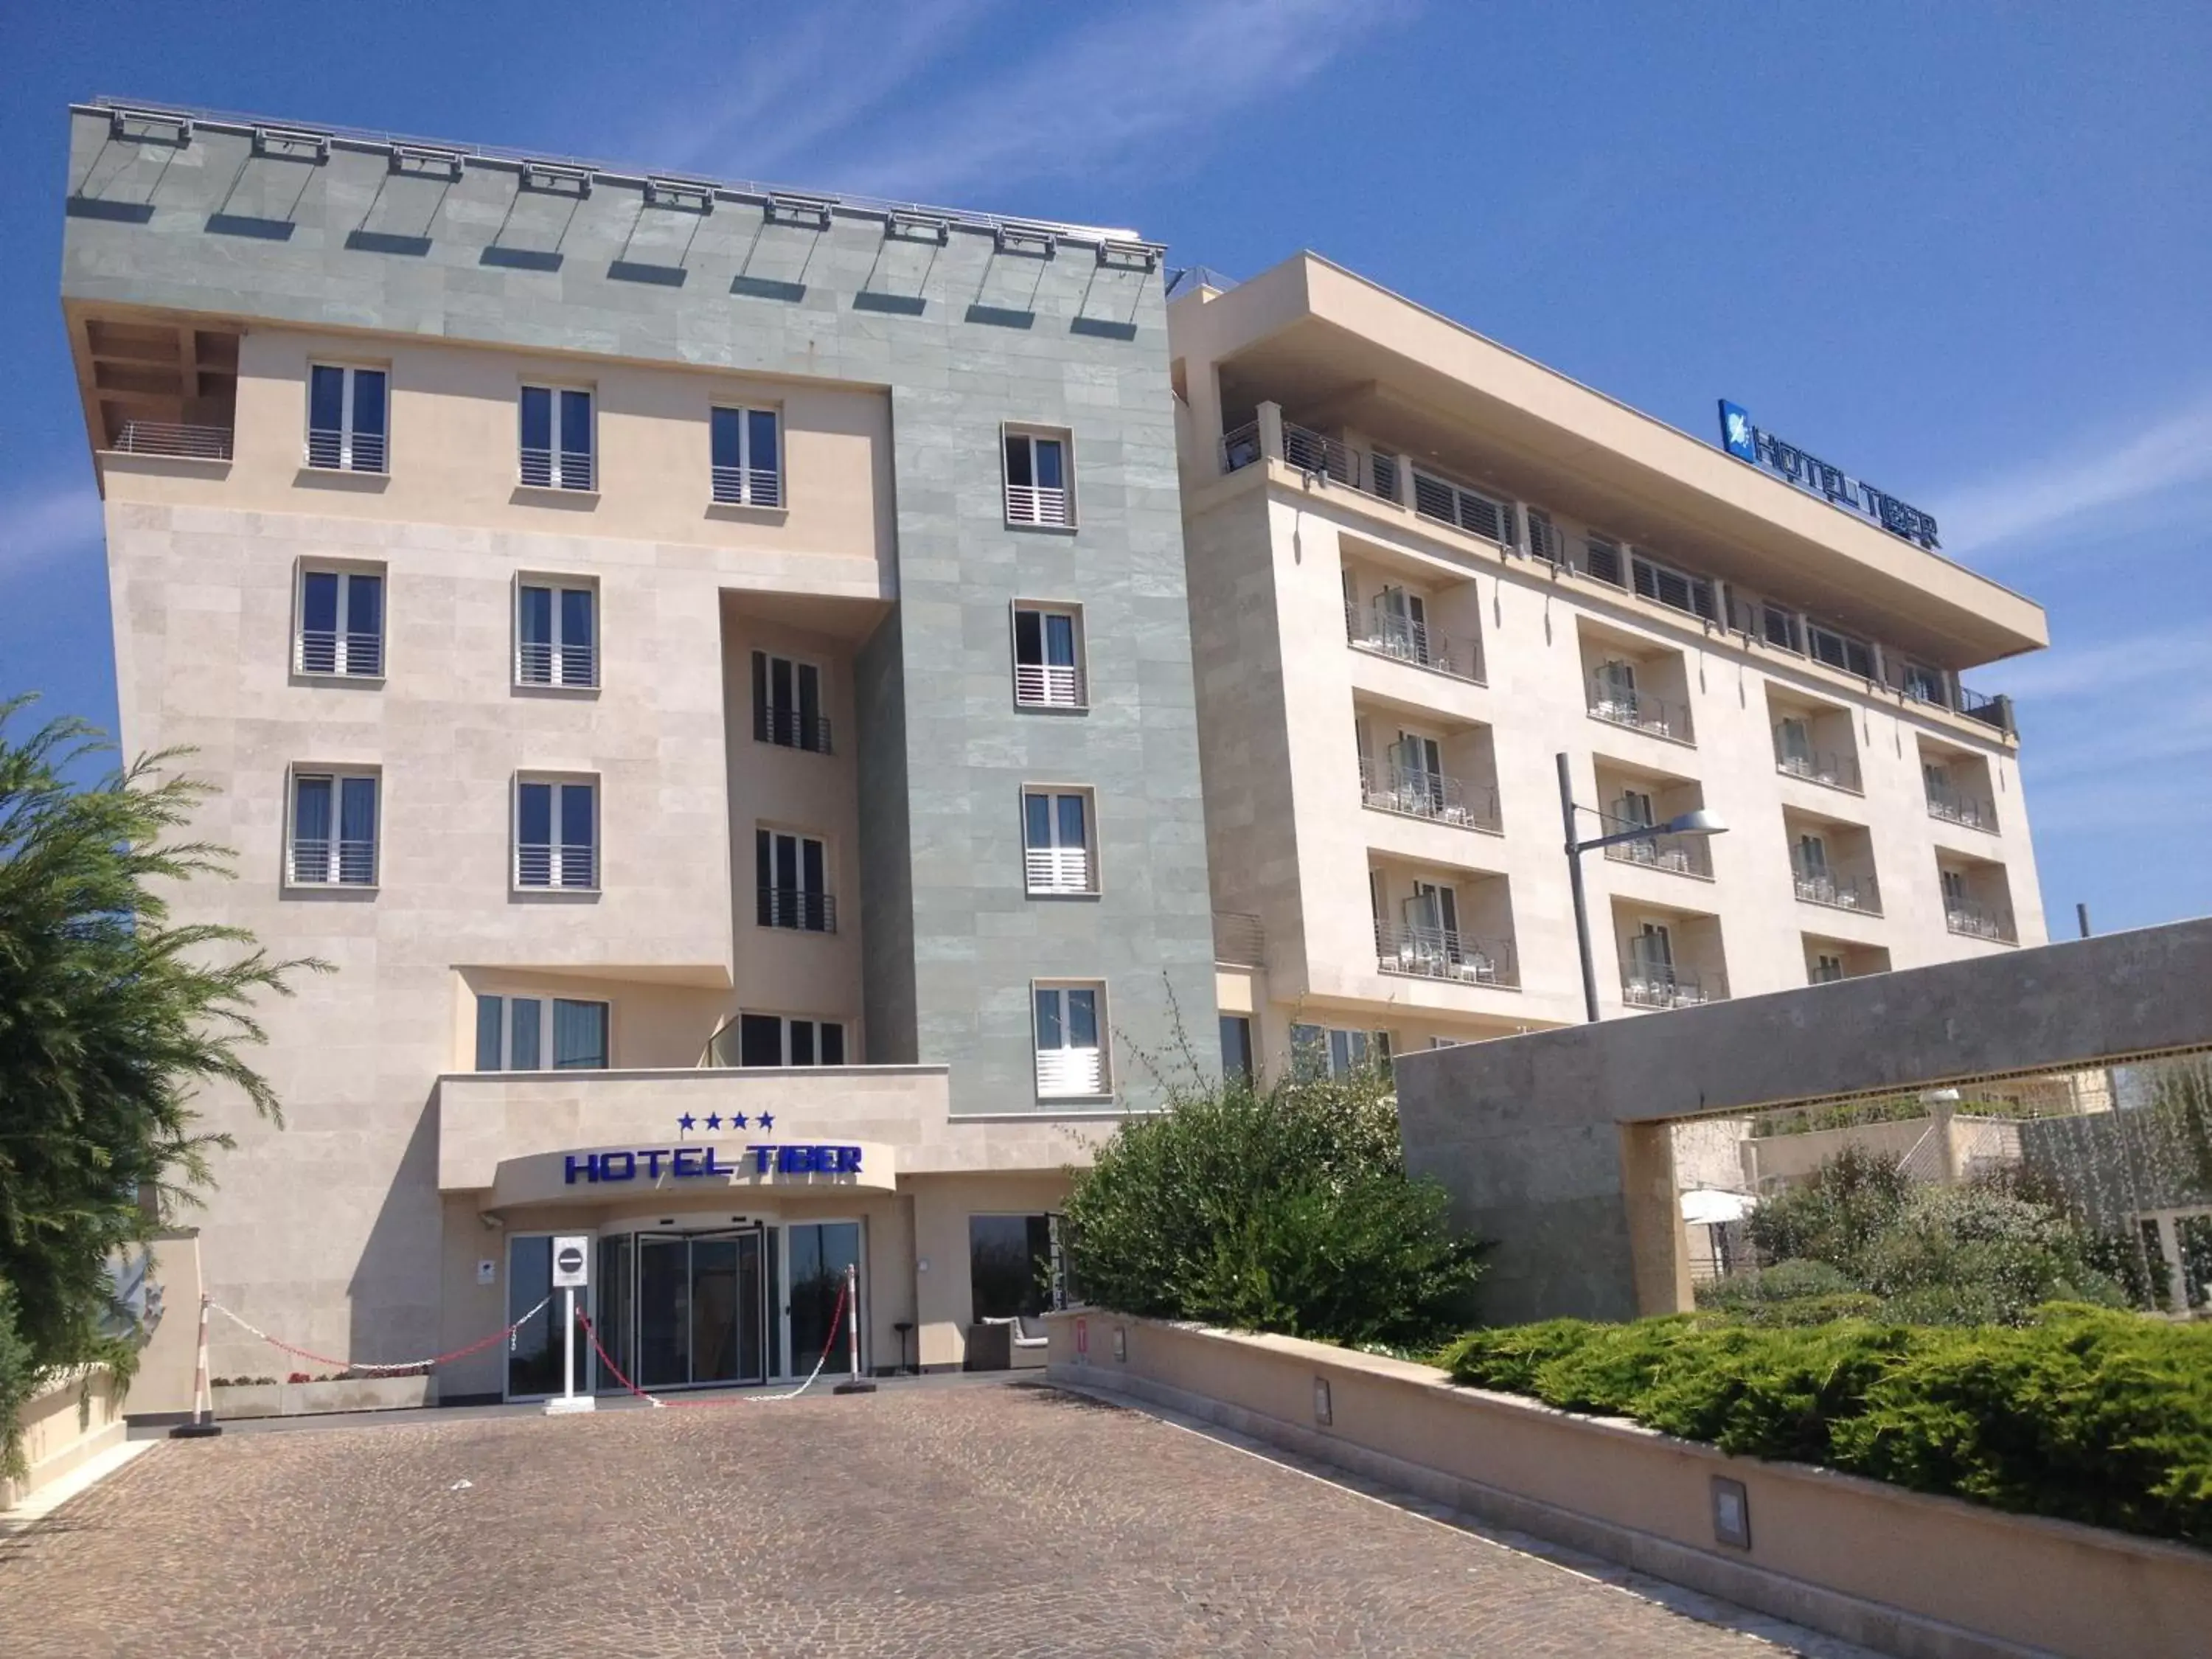 Facade/entrance, Property Building in Hotel Tiber